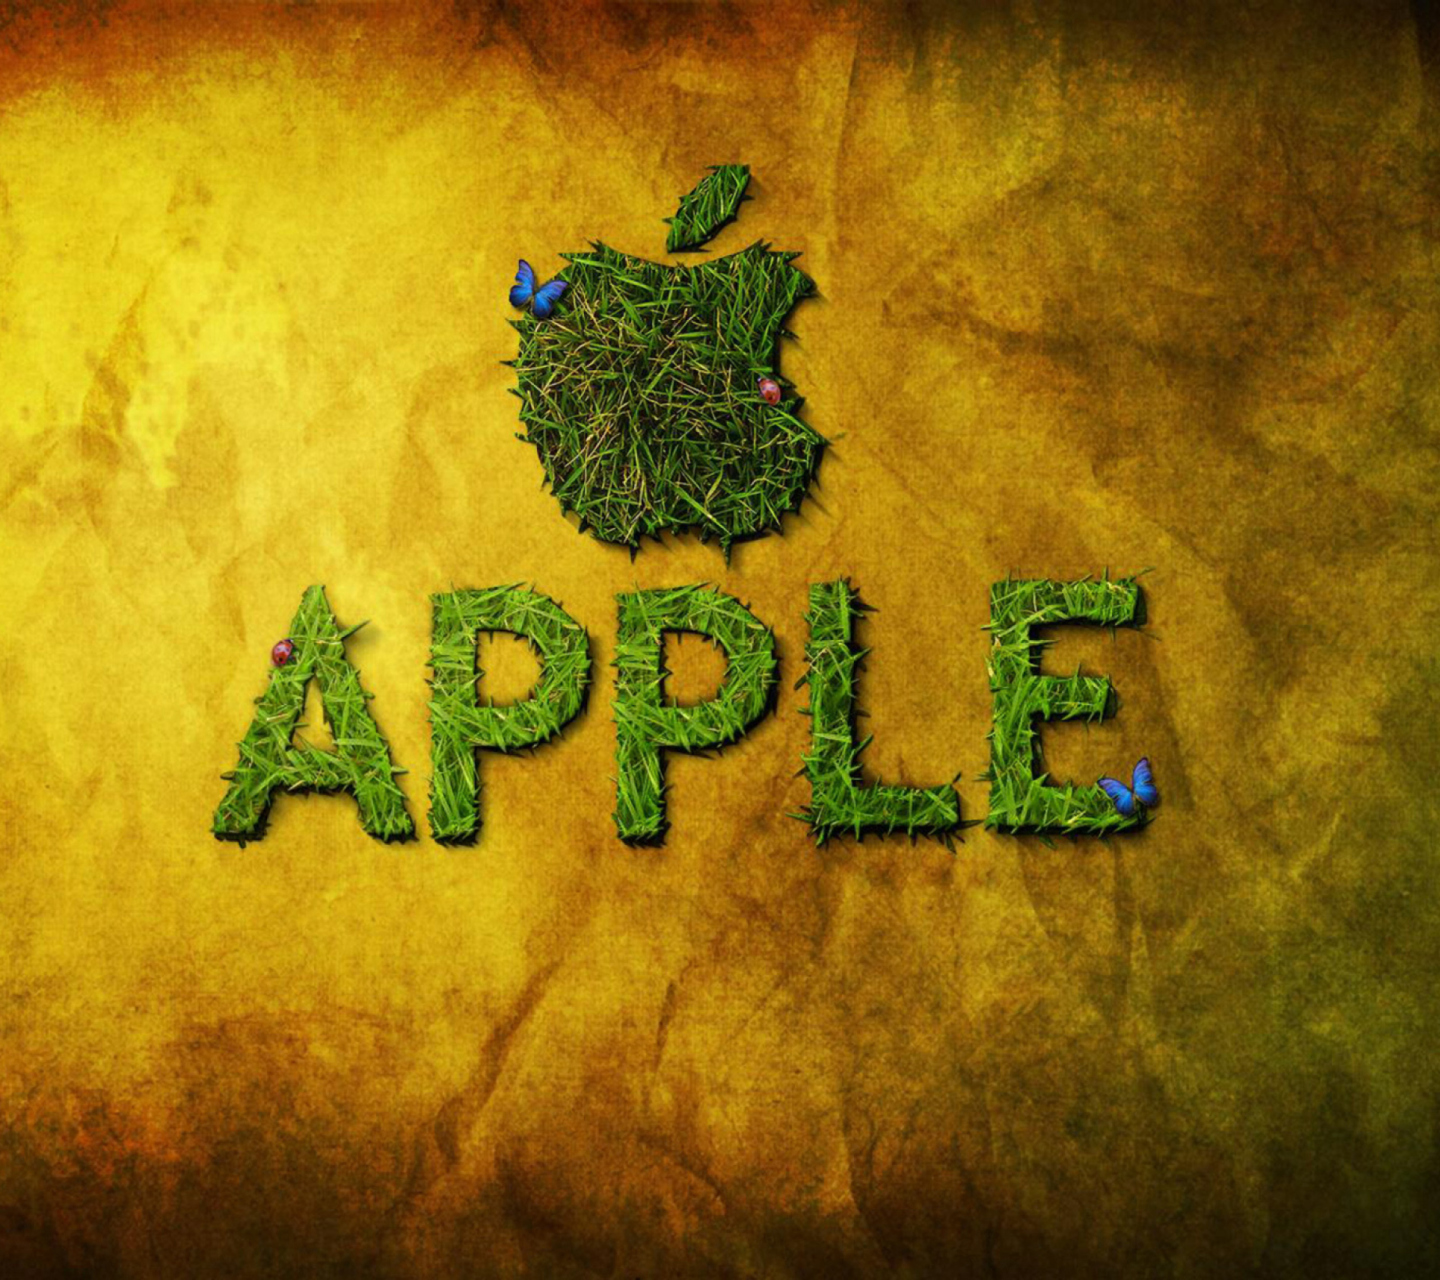 Green Apple wallpaper 1440x1280